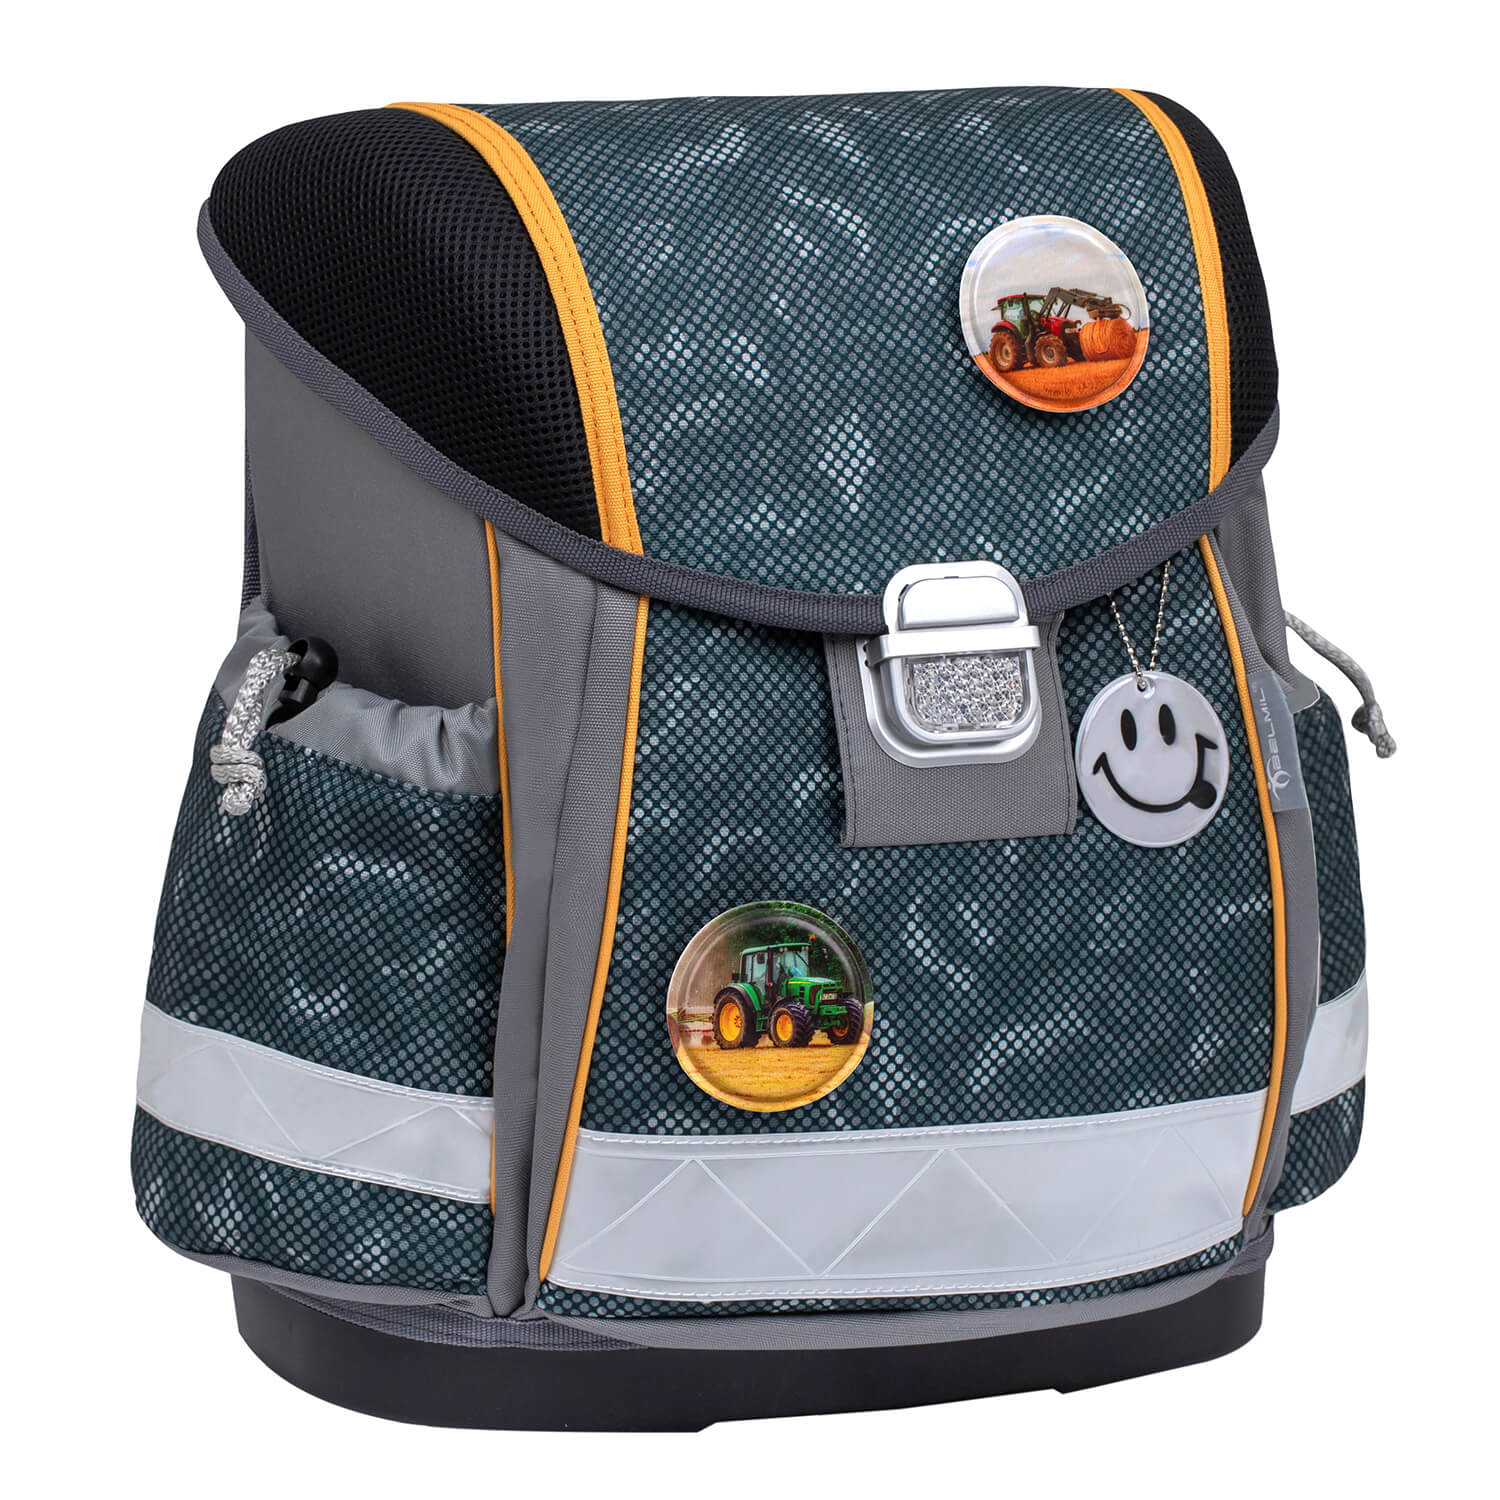 Classy Dark Dots schoolbag set 6 pcs with GRATIS Patch set